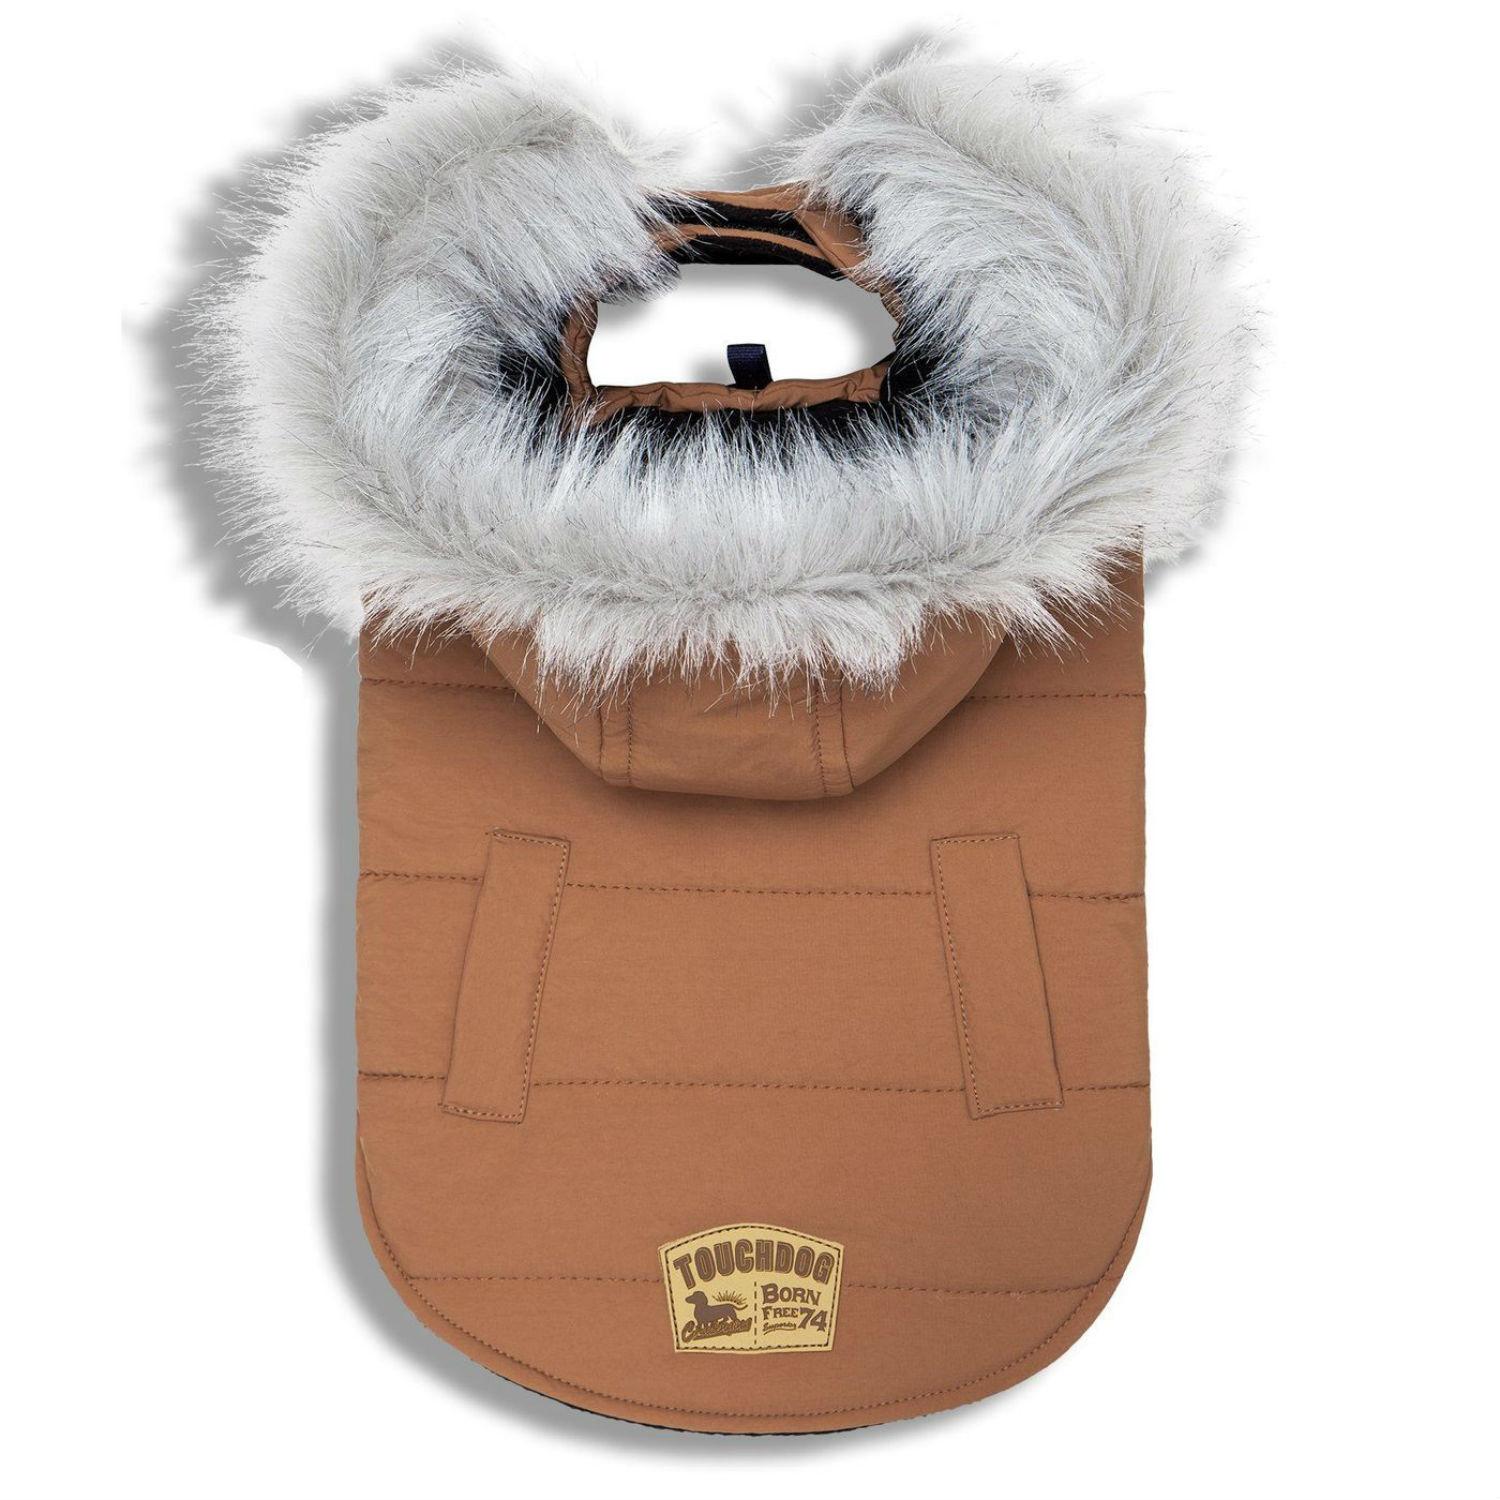 Pet Life Touchdog Eskimo-Swag Winter Dog Coat - Brown